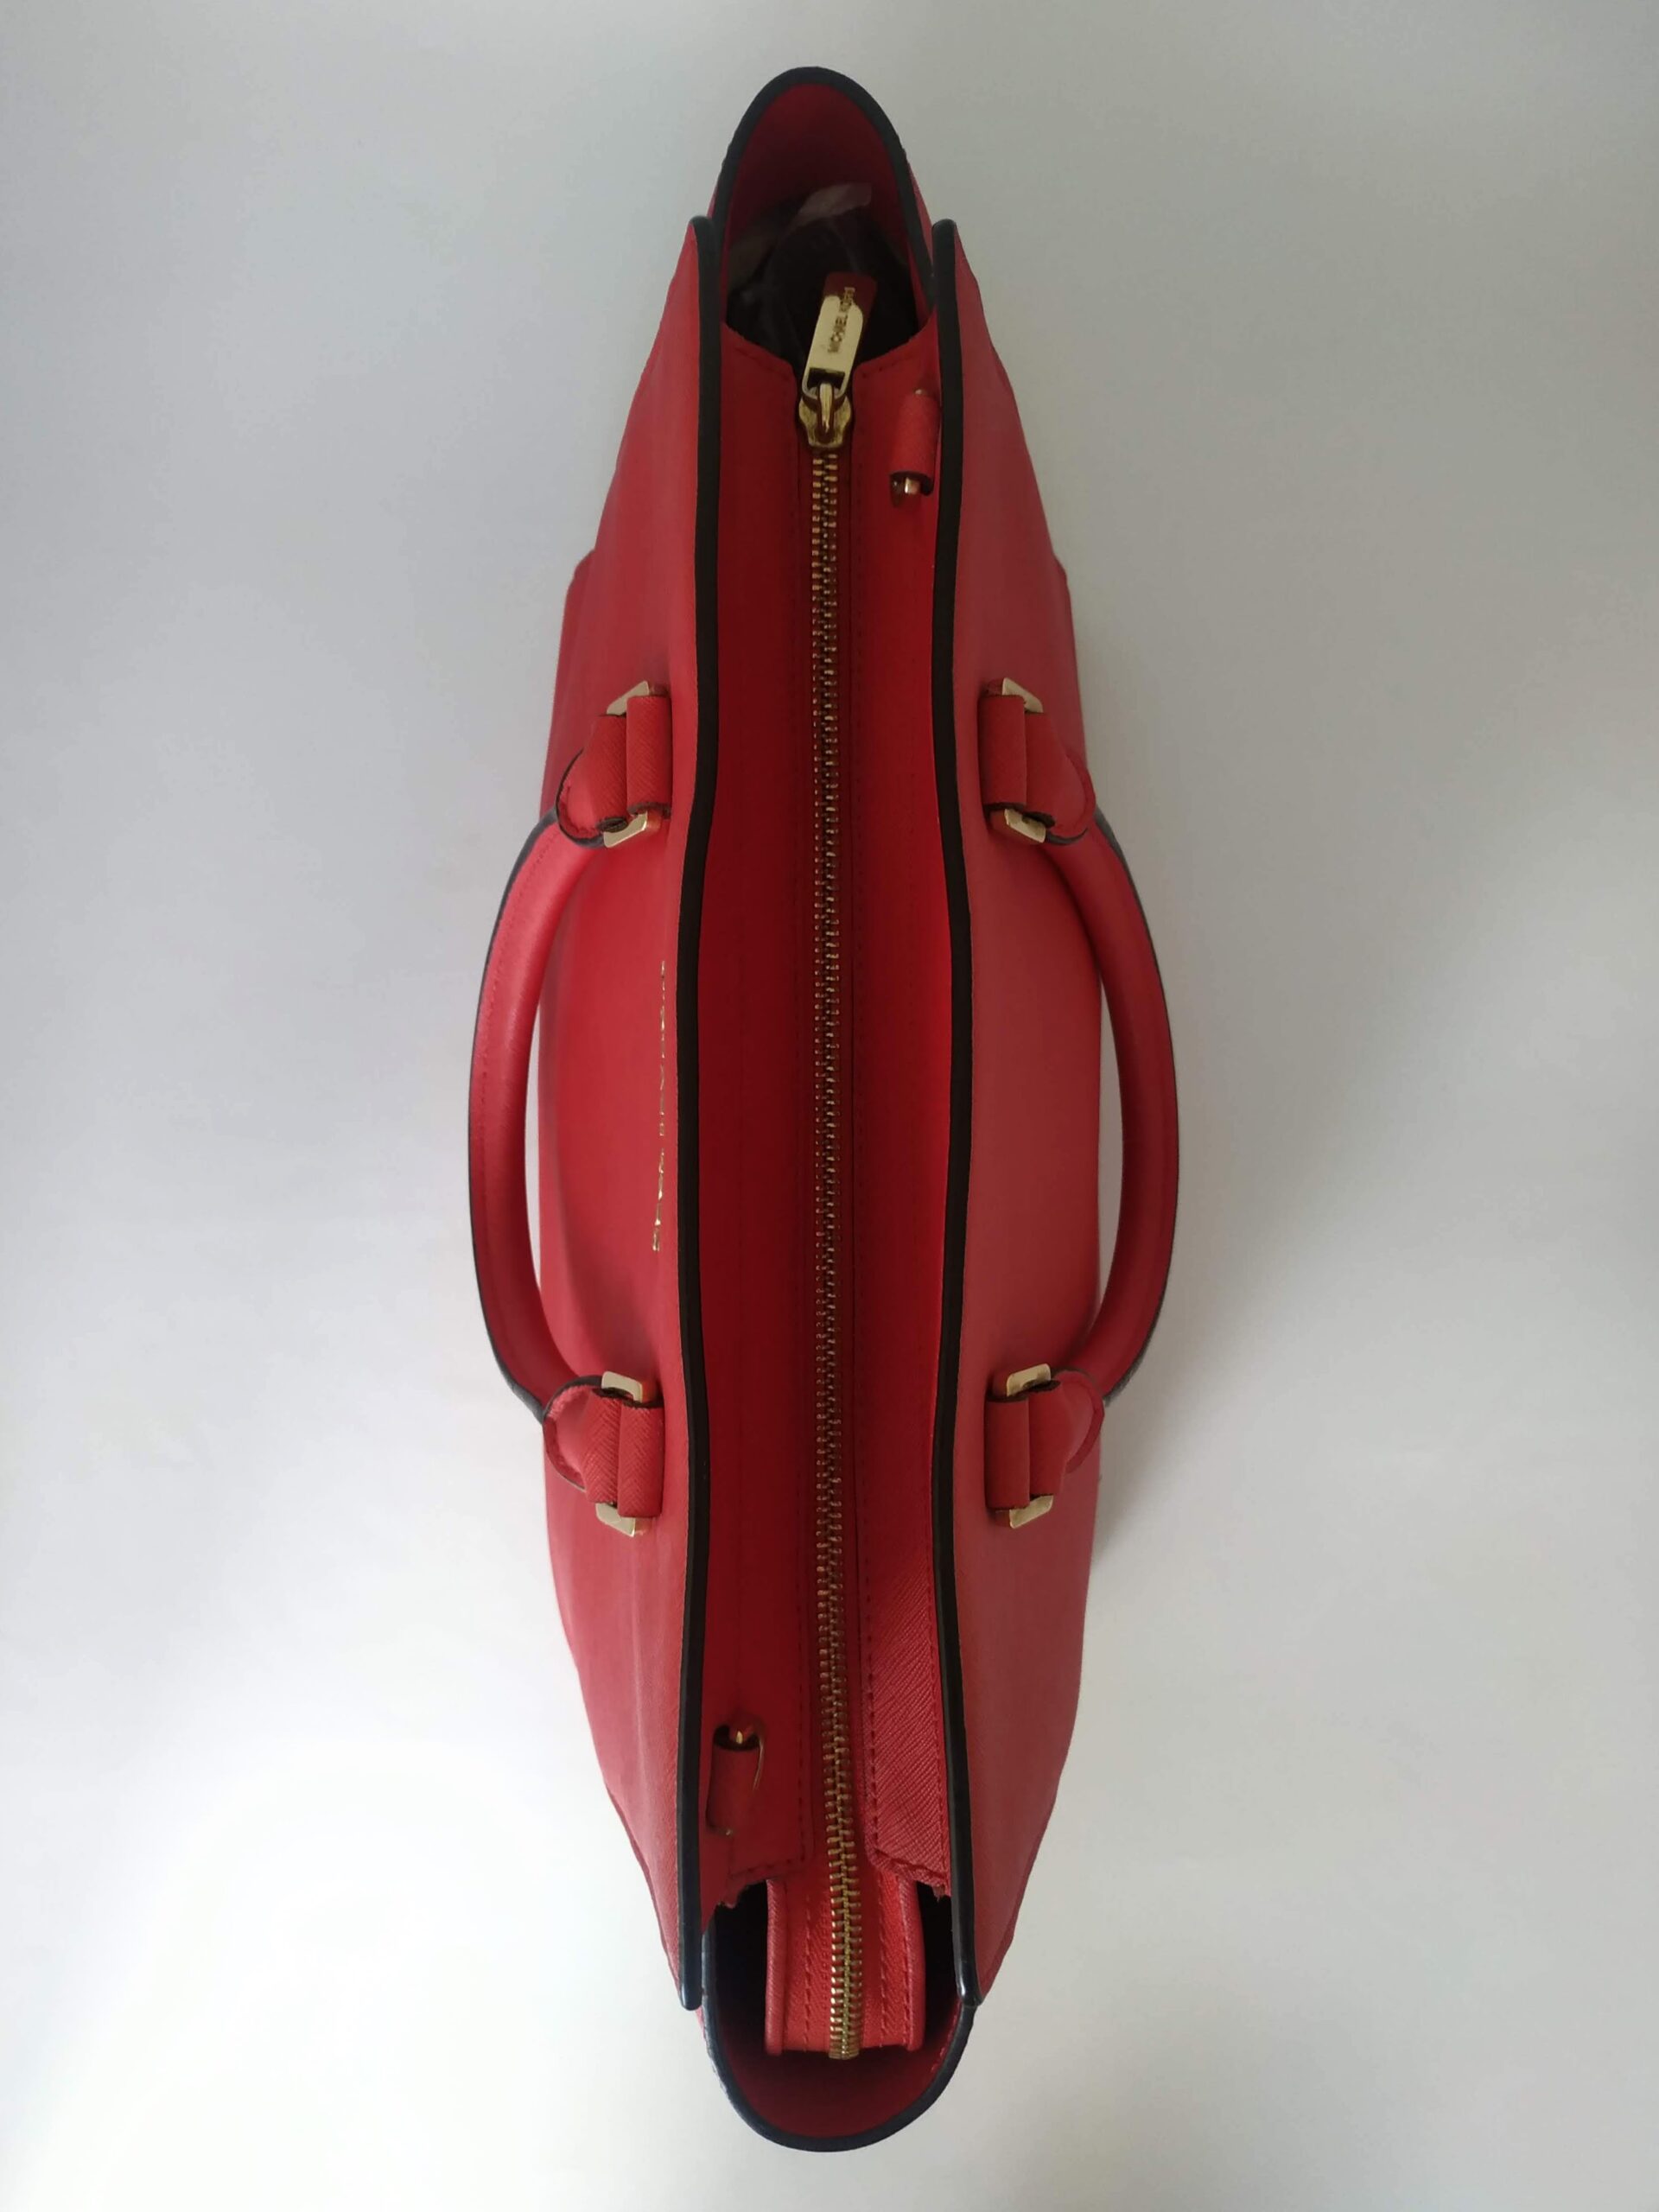 Michael Kors Selma Large Saffiano Leather Satchel Bag